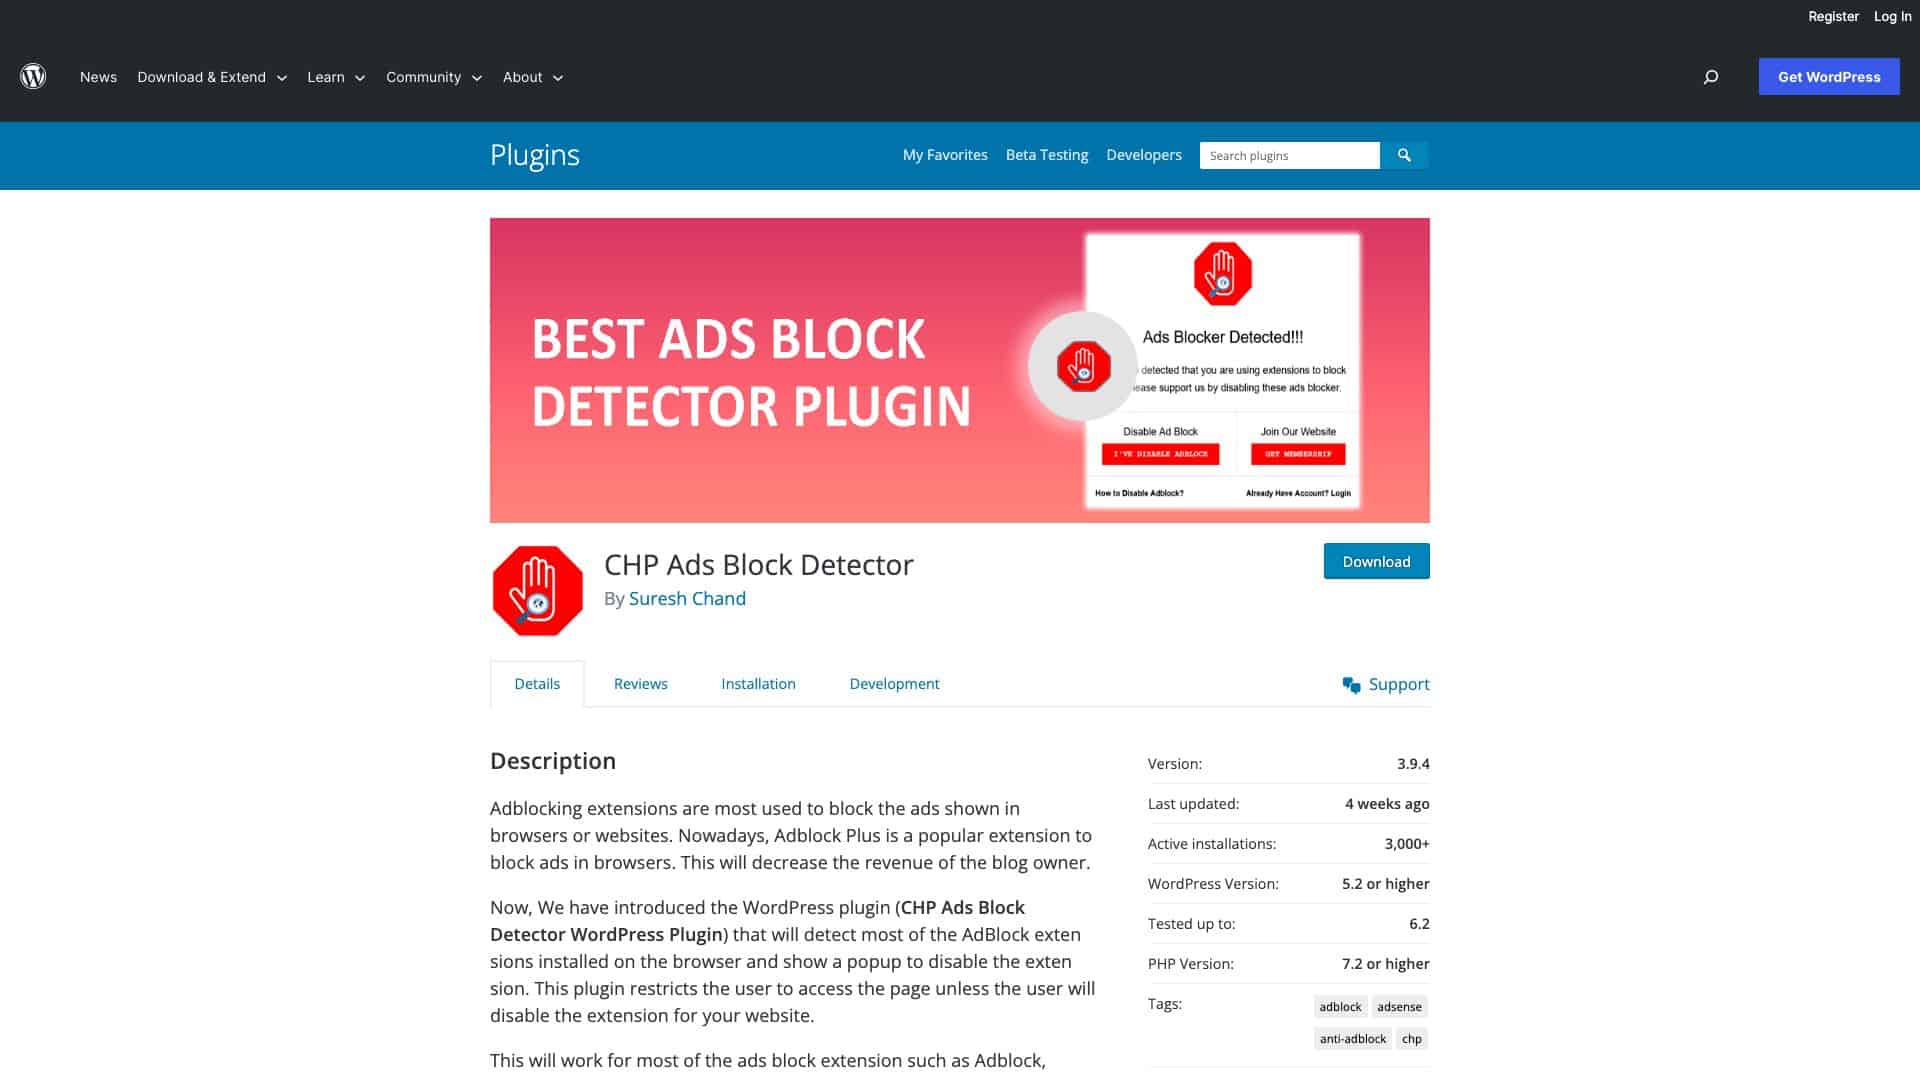 CHP Ads Block Detector